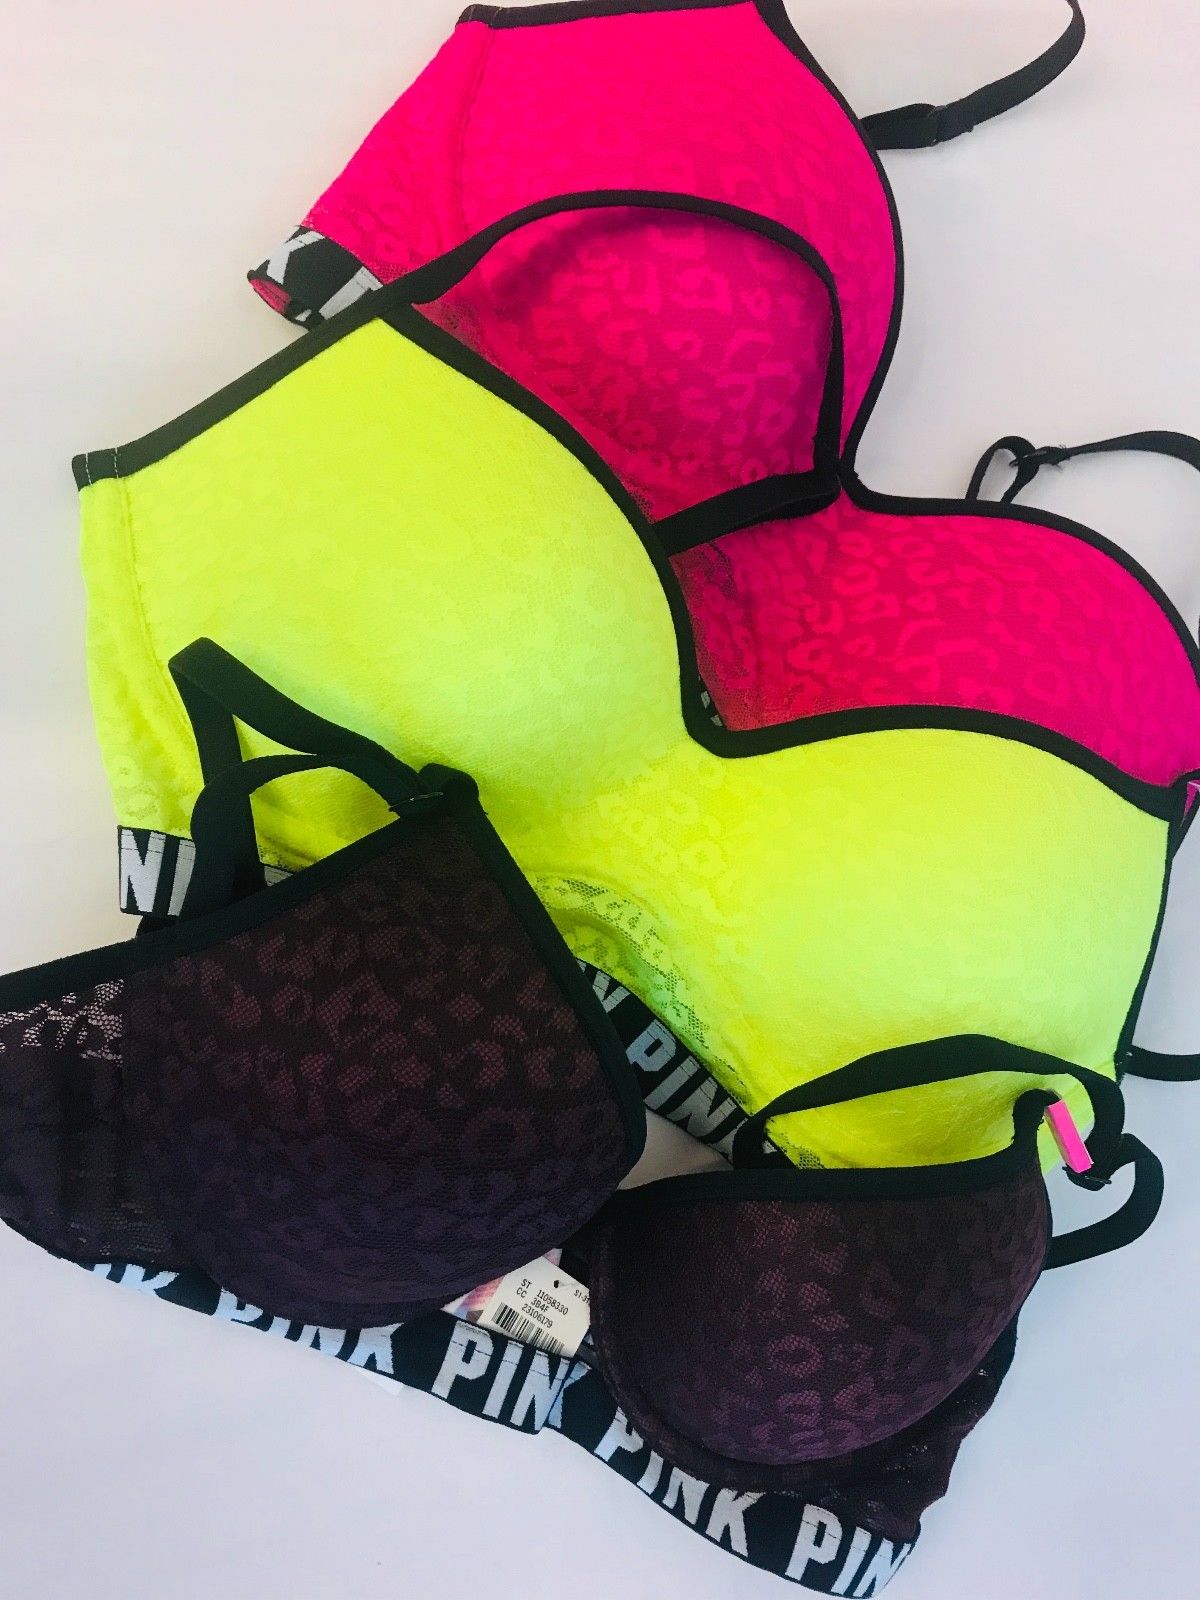 Victoria's Secret push up bras, bralettes stock lot (100pcs